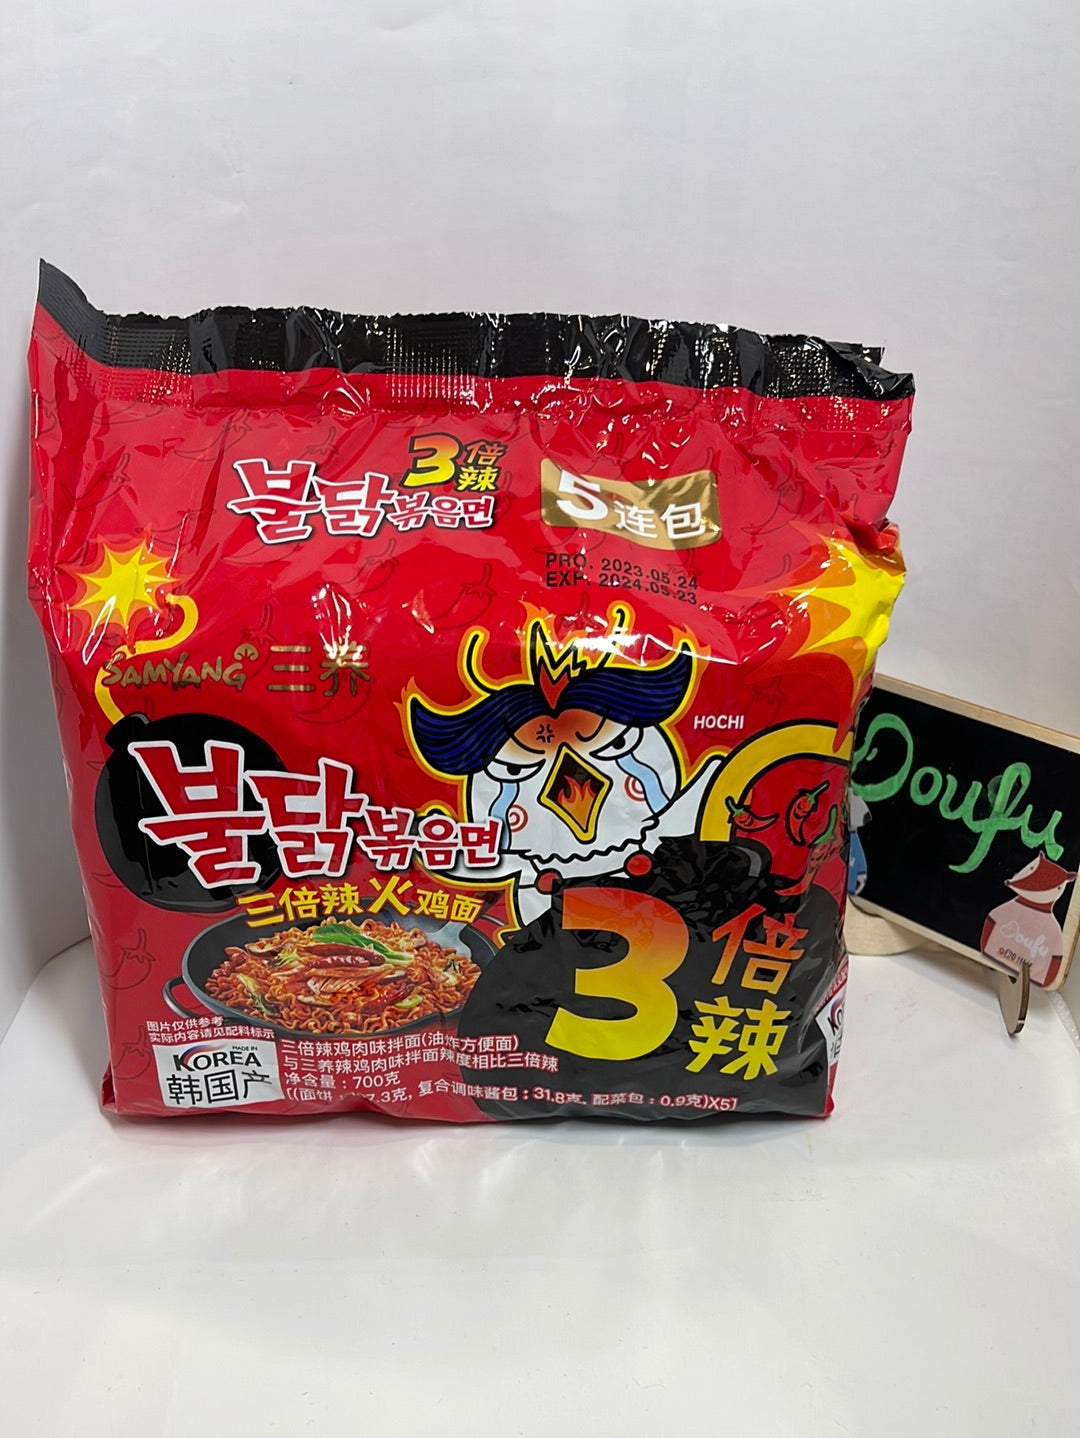 triple spicy hot chicken noodle 5packs 三倍辣火鸡面五连包